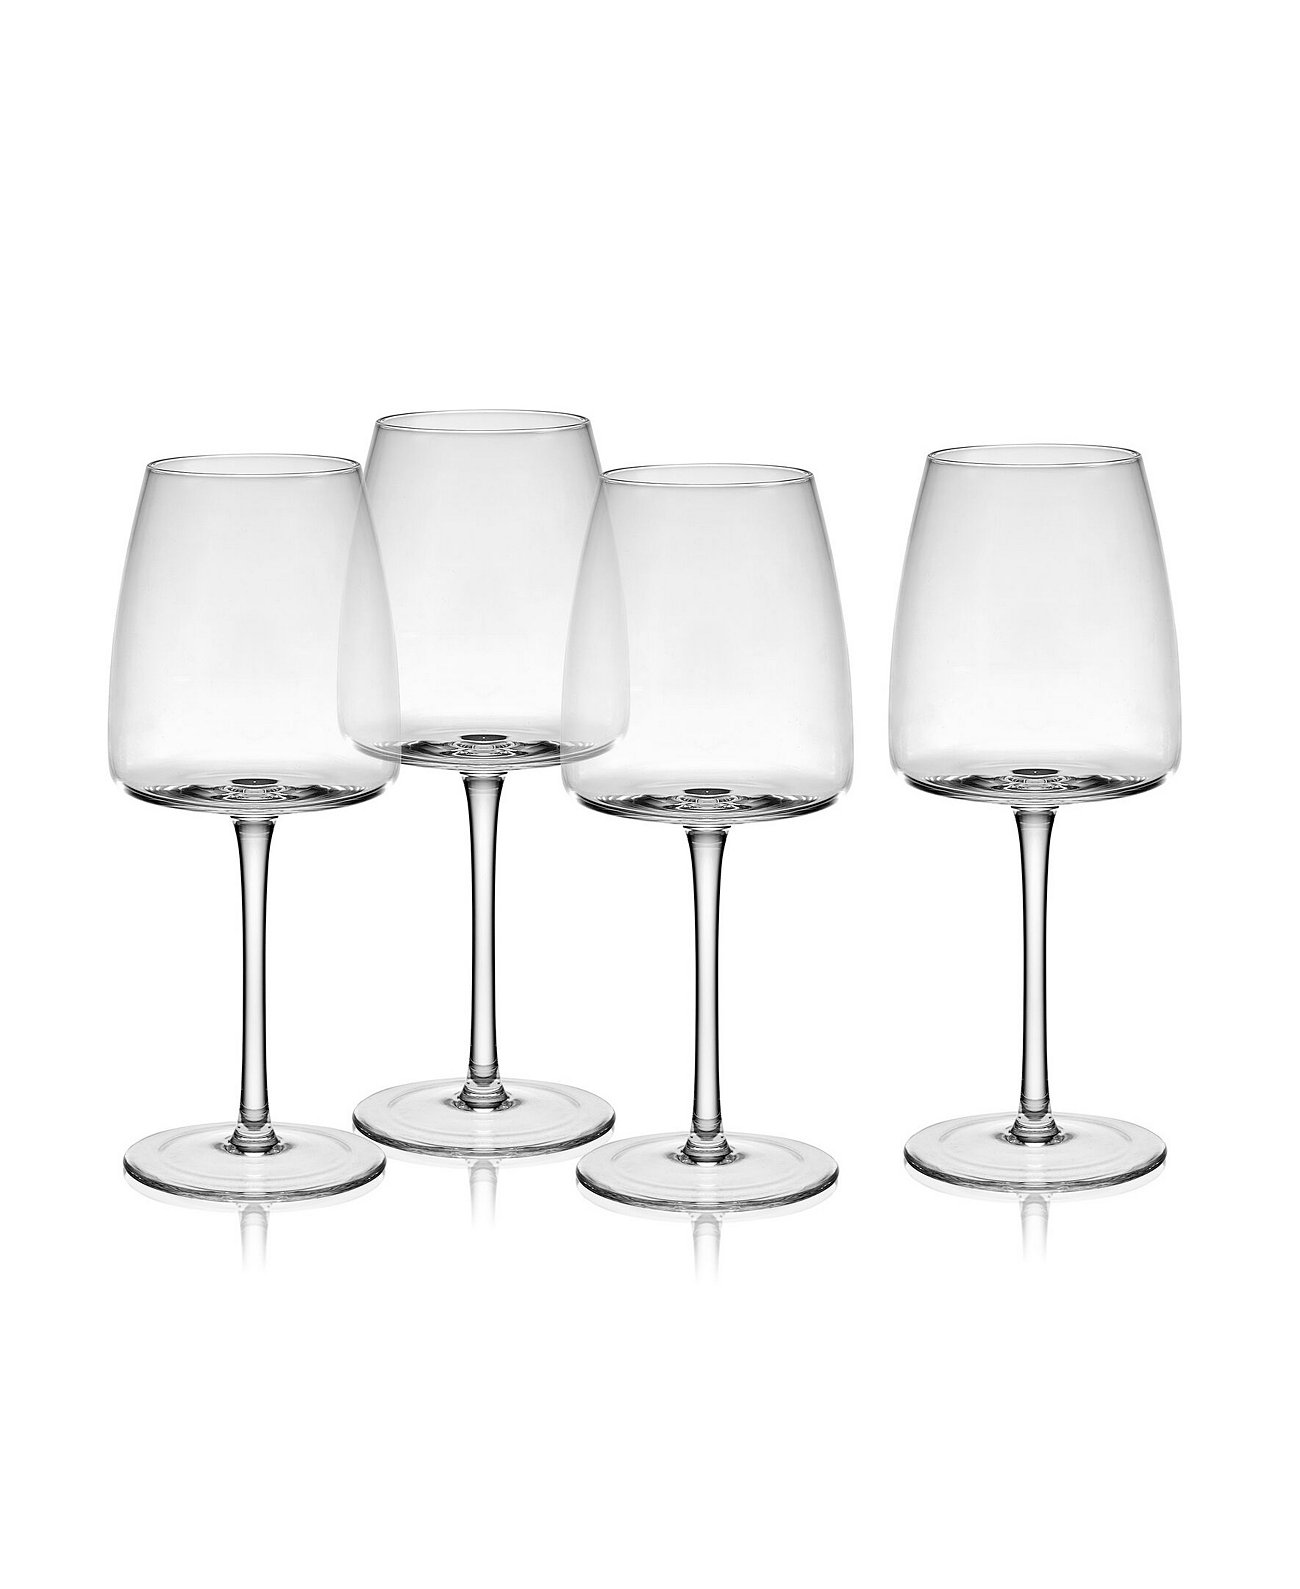 Бокалы для белого вина Cora на 13 унций, набор из 4 предметов MIKASA